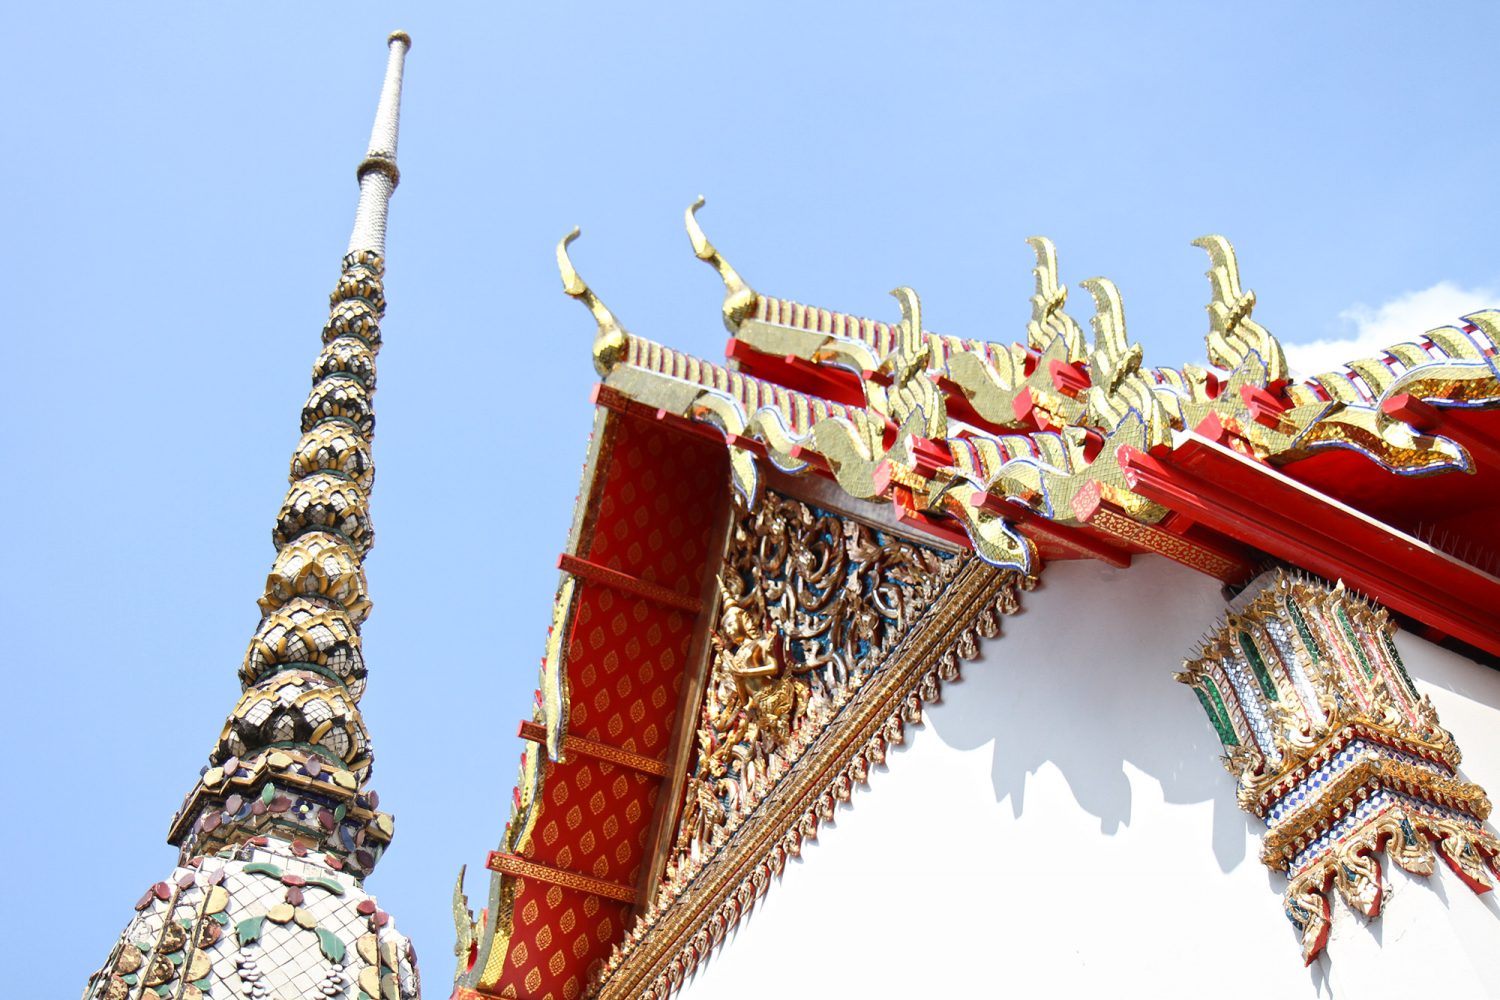 Temple Wat Pho Bangkok